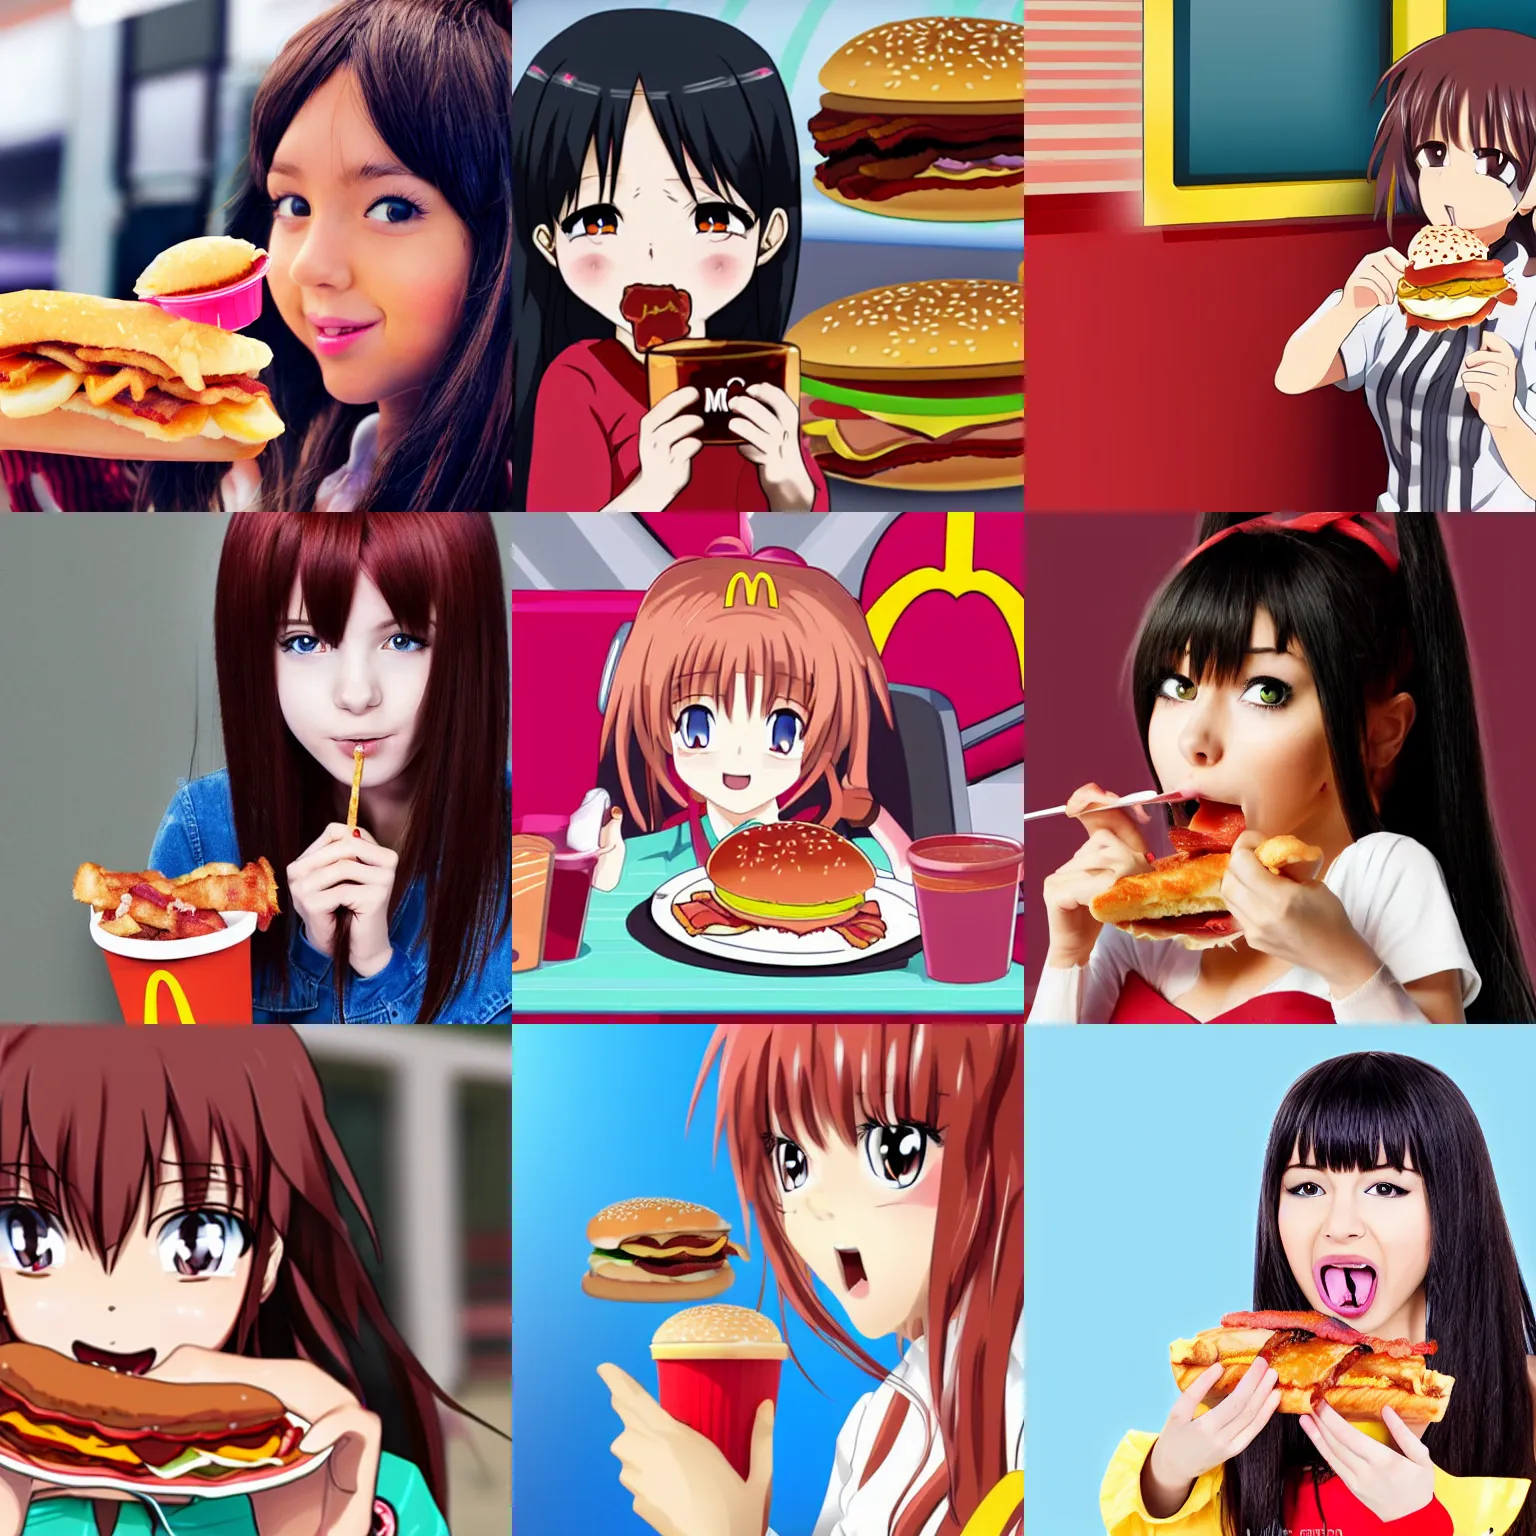 McDonalds x One Piece Collaboration - Umami Punch